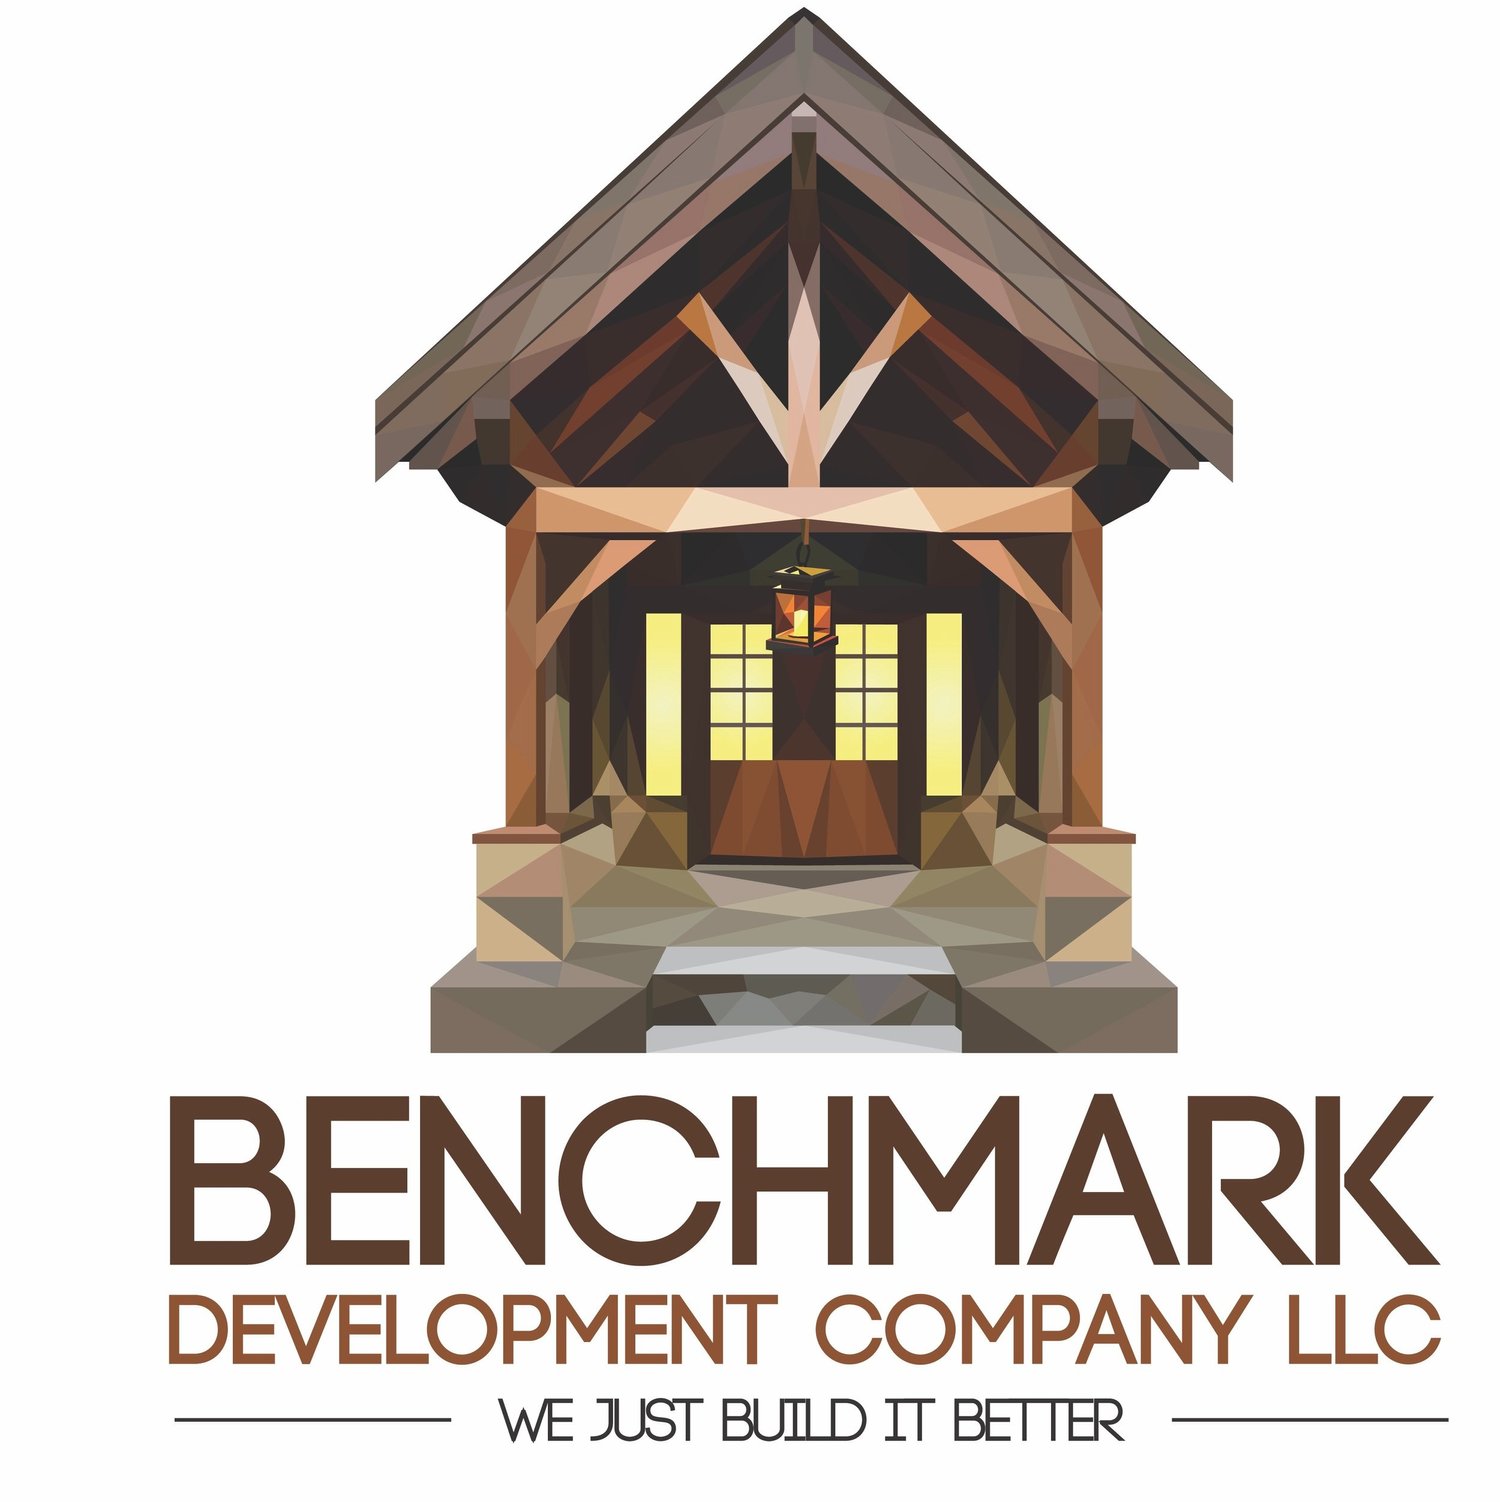 Benchmark Development Company LLC